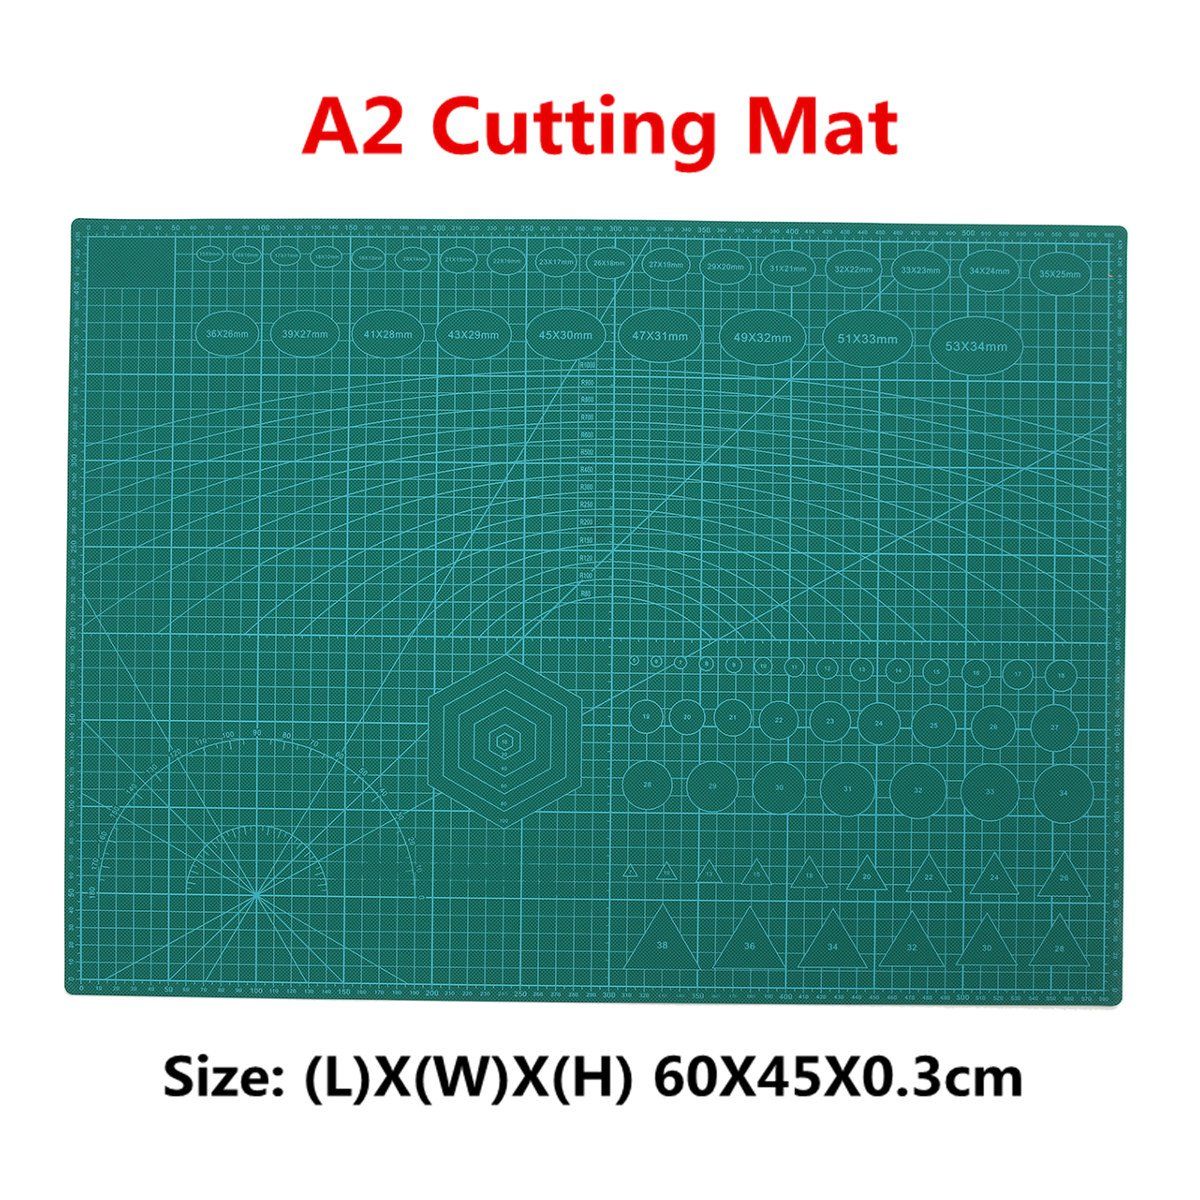 A2-PVC-Double-Printed-Self-Healing-Cutting-Mat-Craft-Quilting-Scrapbooking-Board-1163235